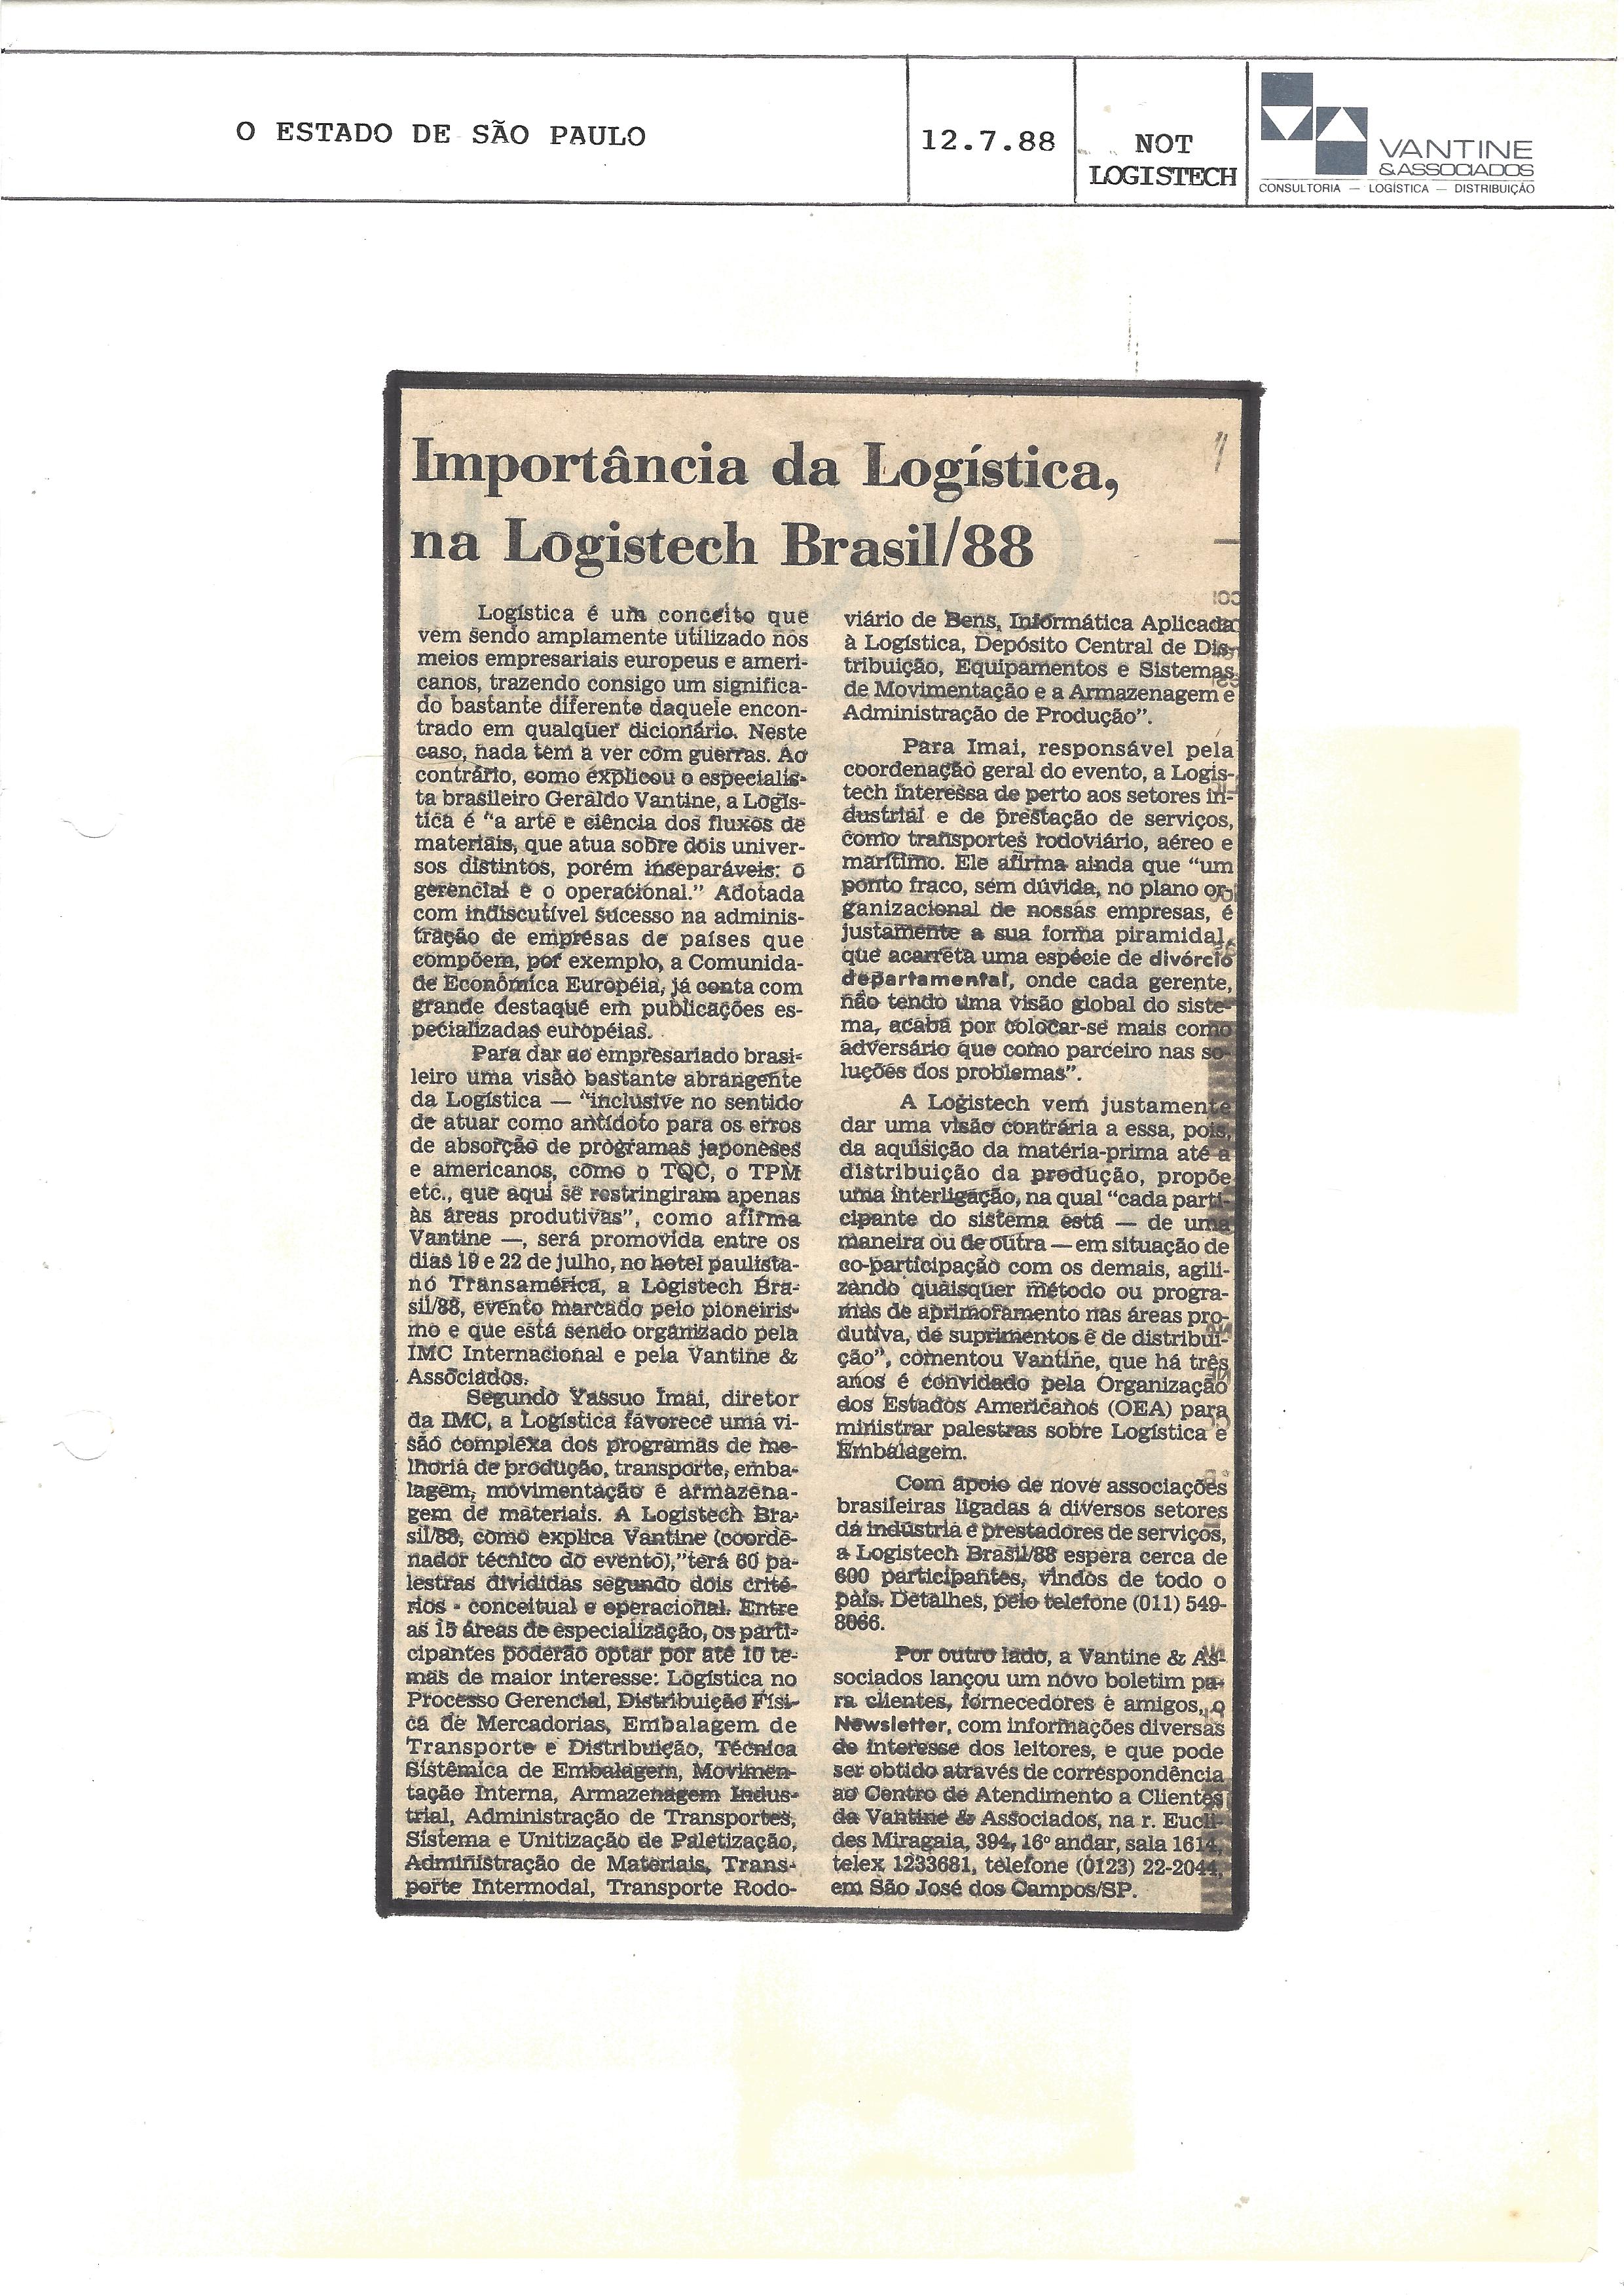 IMPORTÂNCIA DA LOGÍSTICA – LOGISTECH BRASIL/88